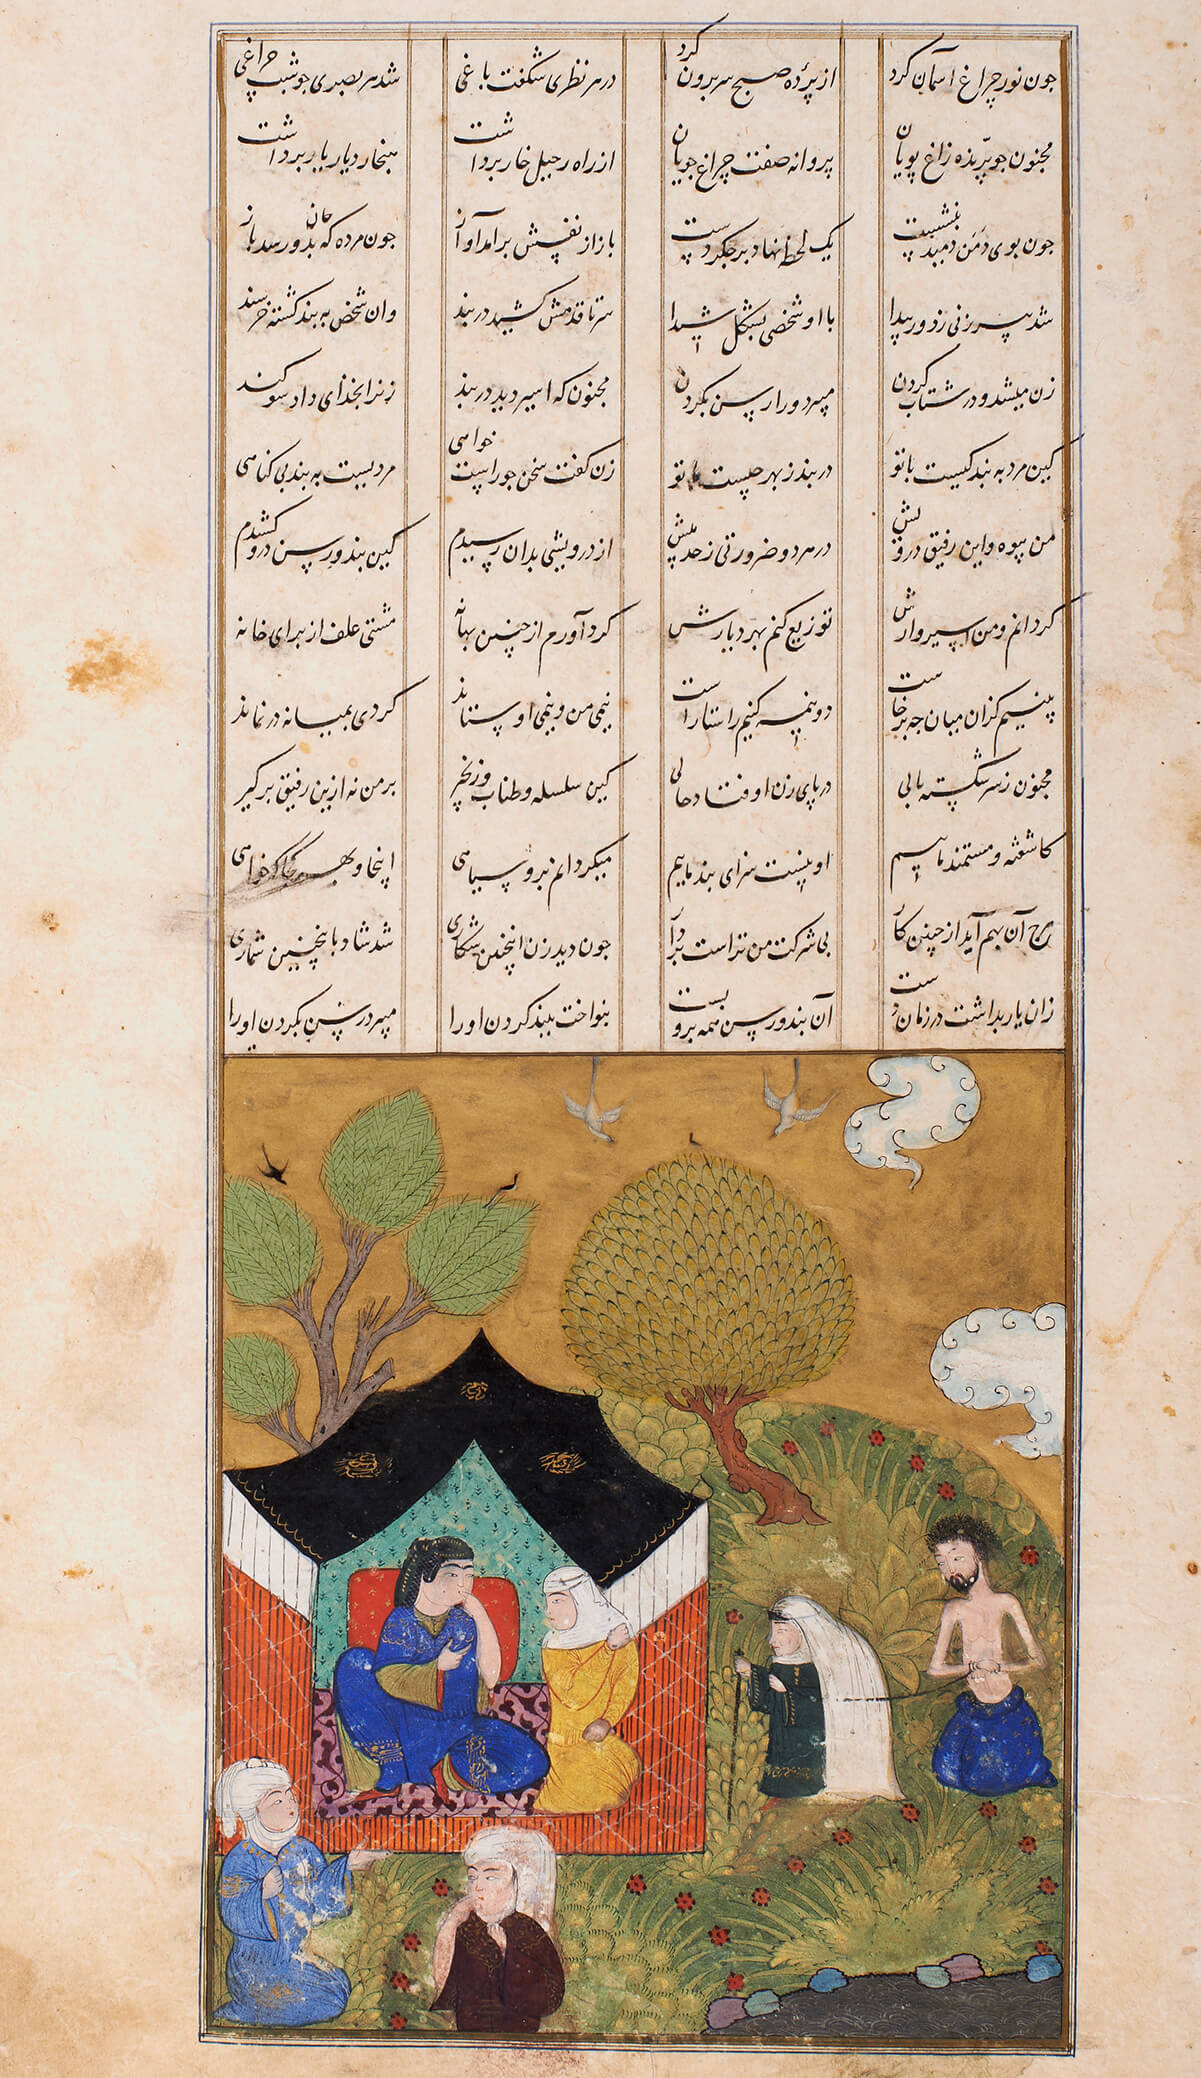 Majnun led to Layla's camp